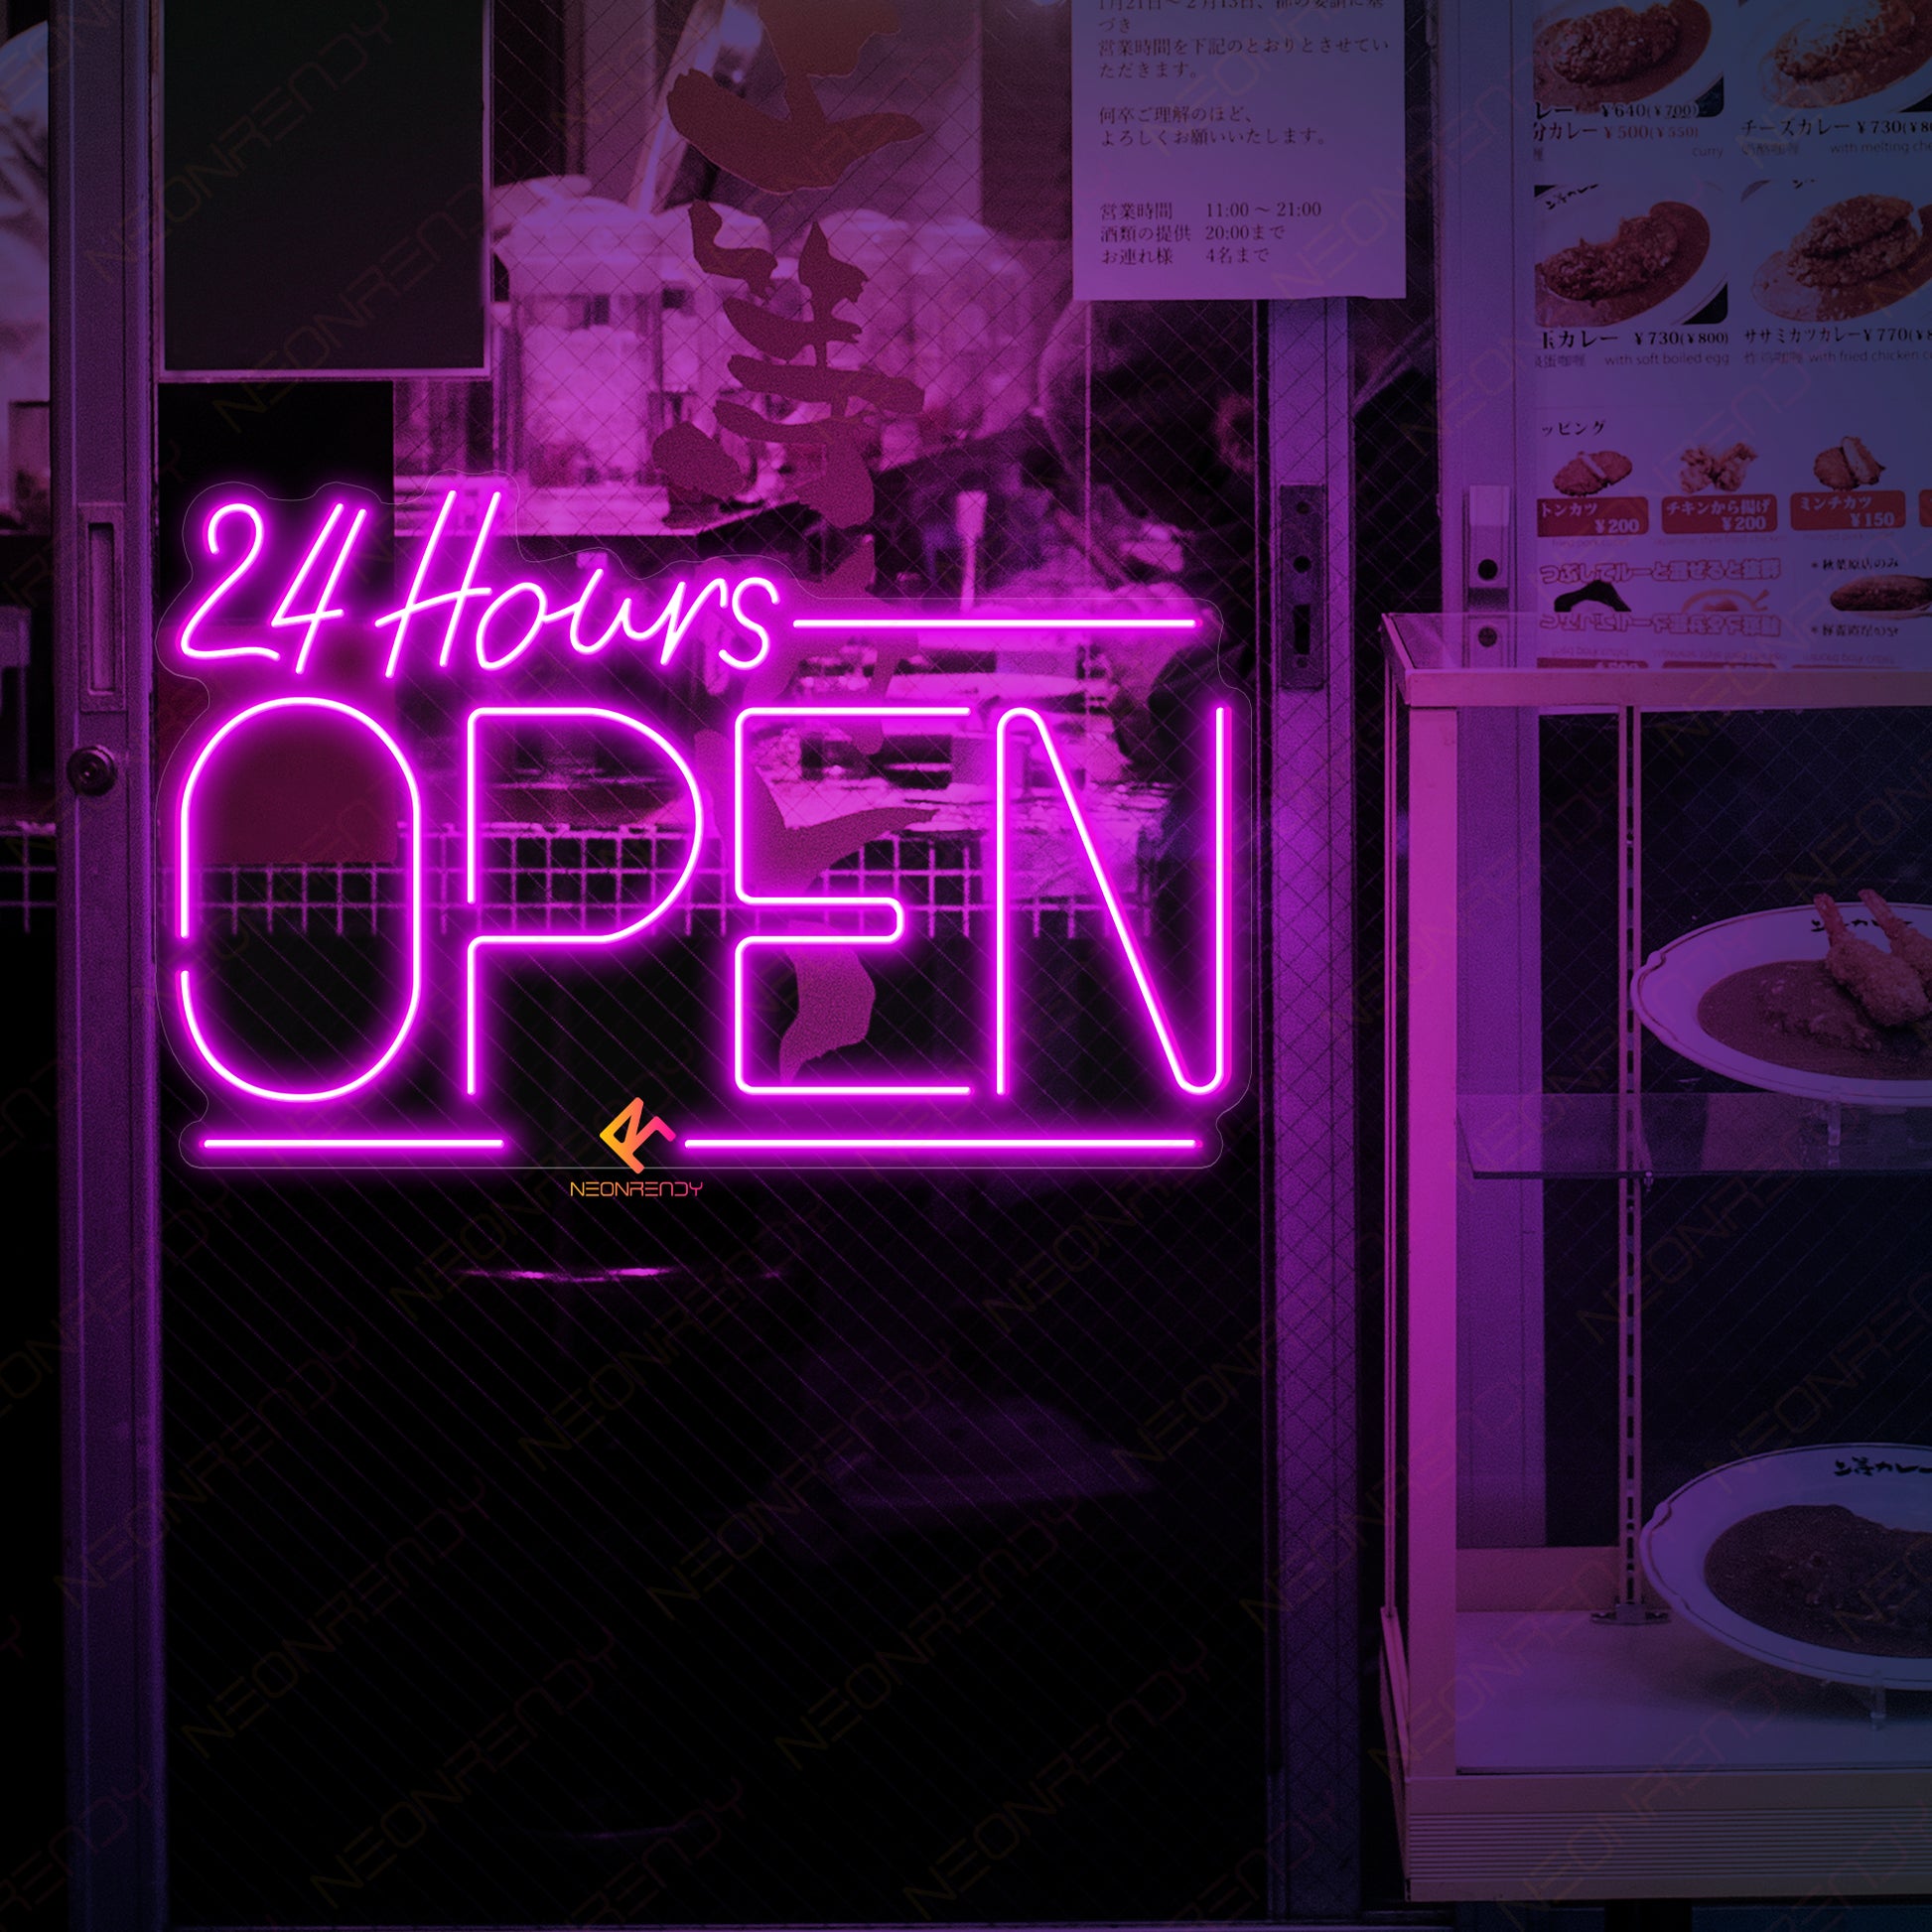 Neon Open 24 Hours Sign Open Led Light purple